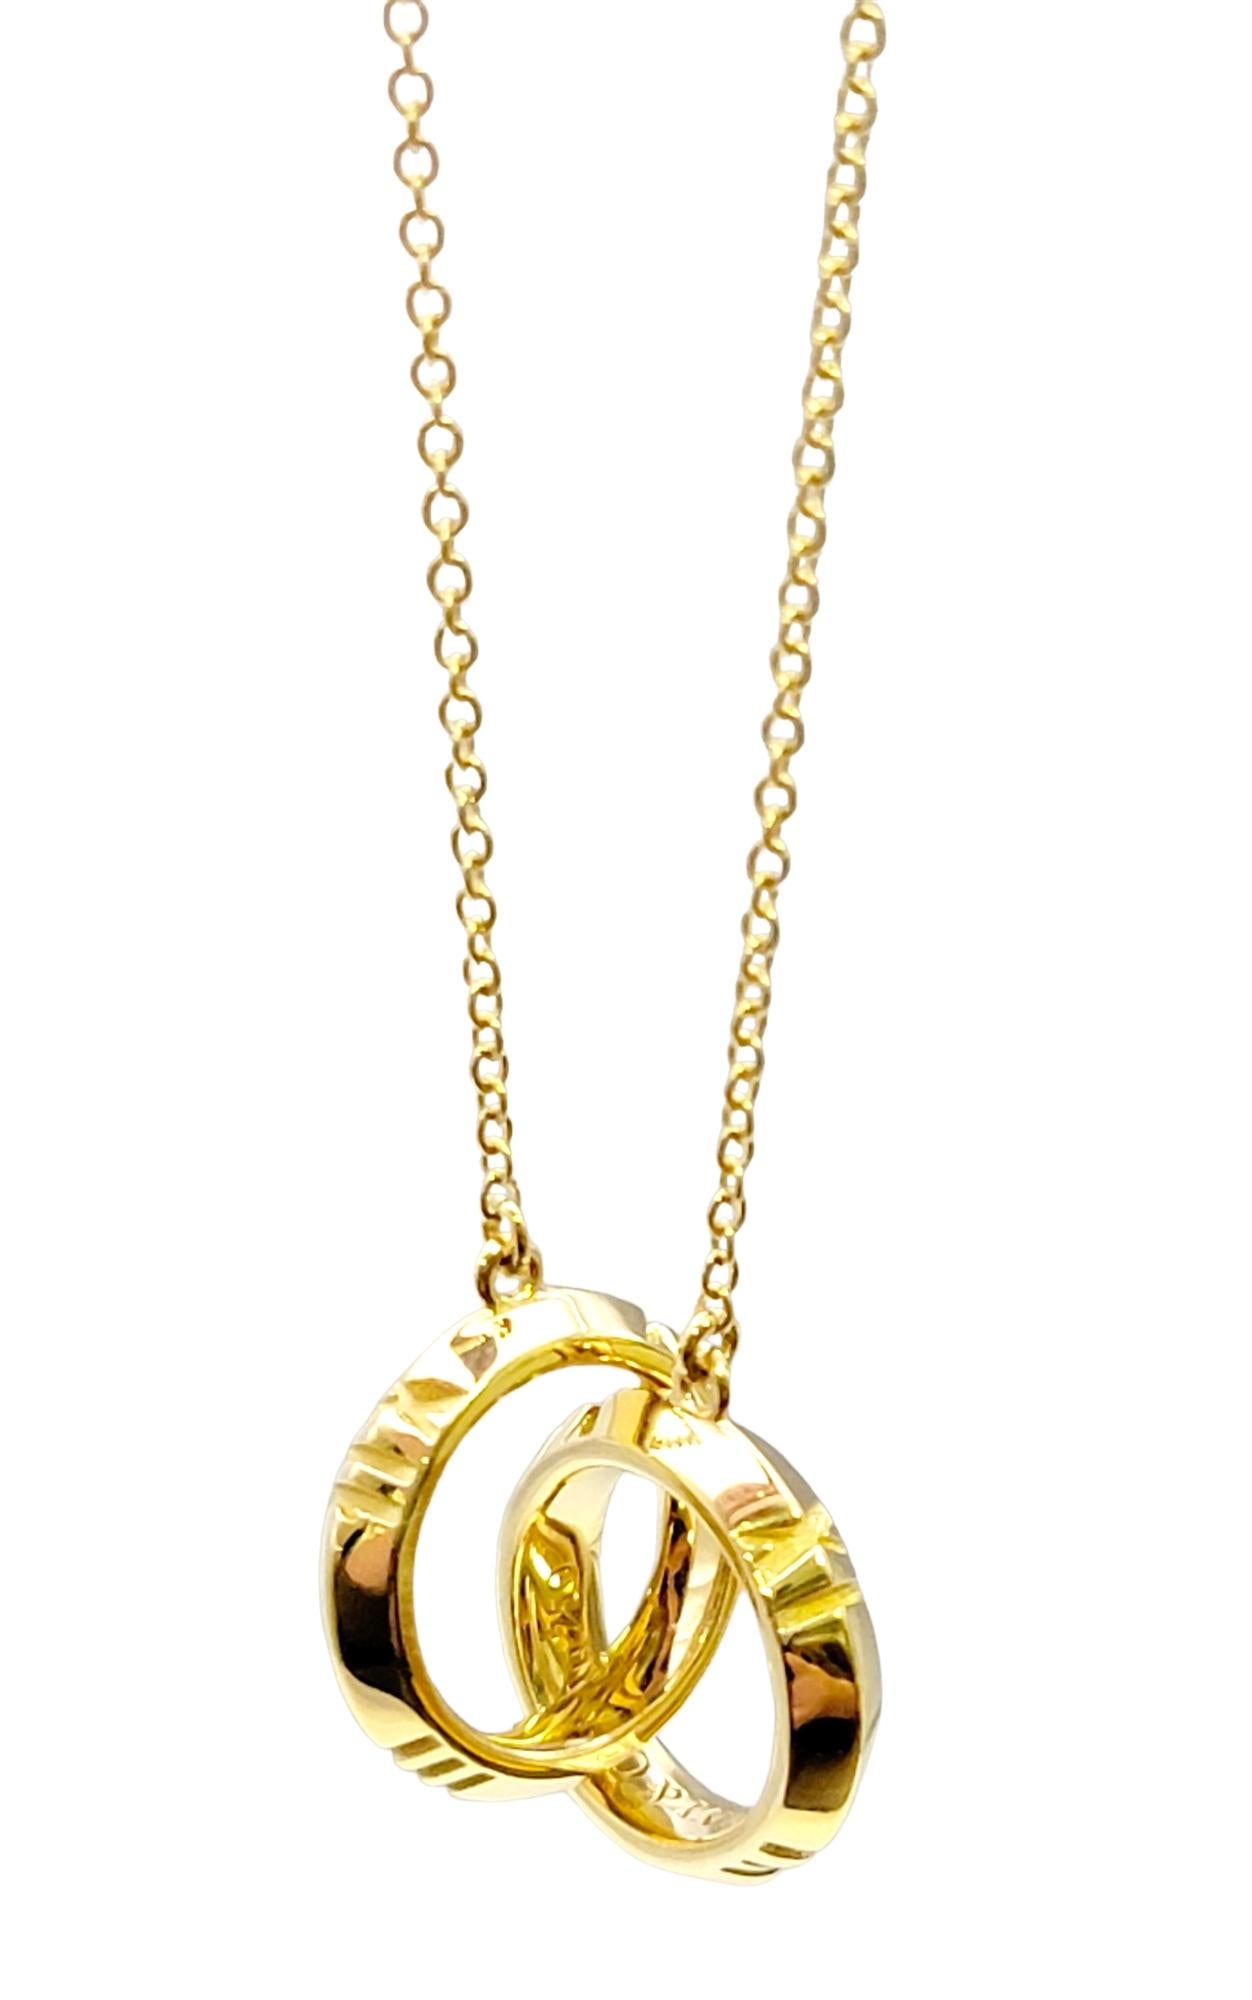 Contemporain Tiffany & Co. Atlas, collier pendentif en or jaune 18 carats avec pendentif imbriqué en forme de X